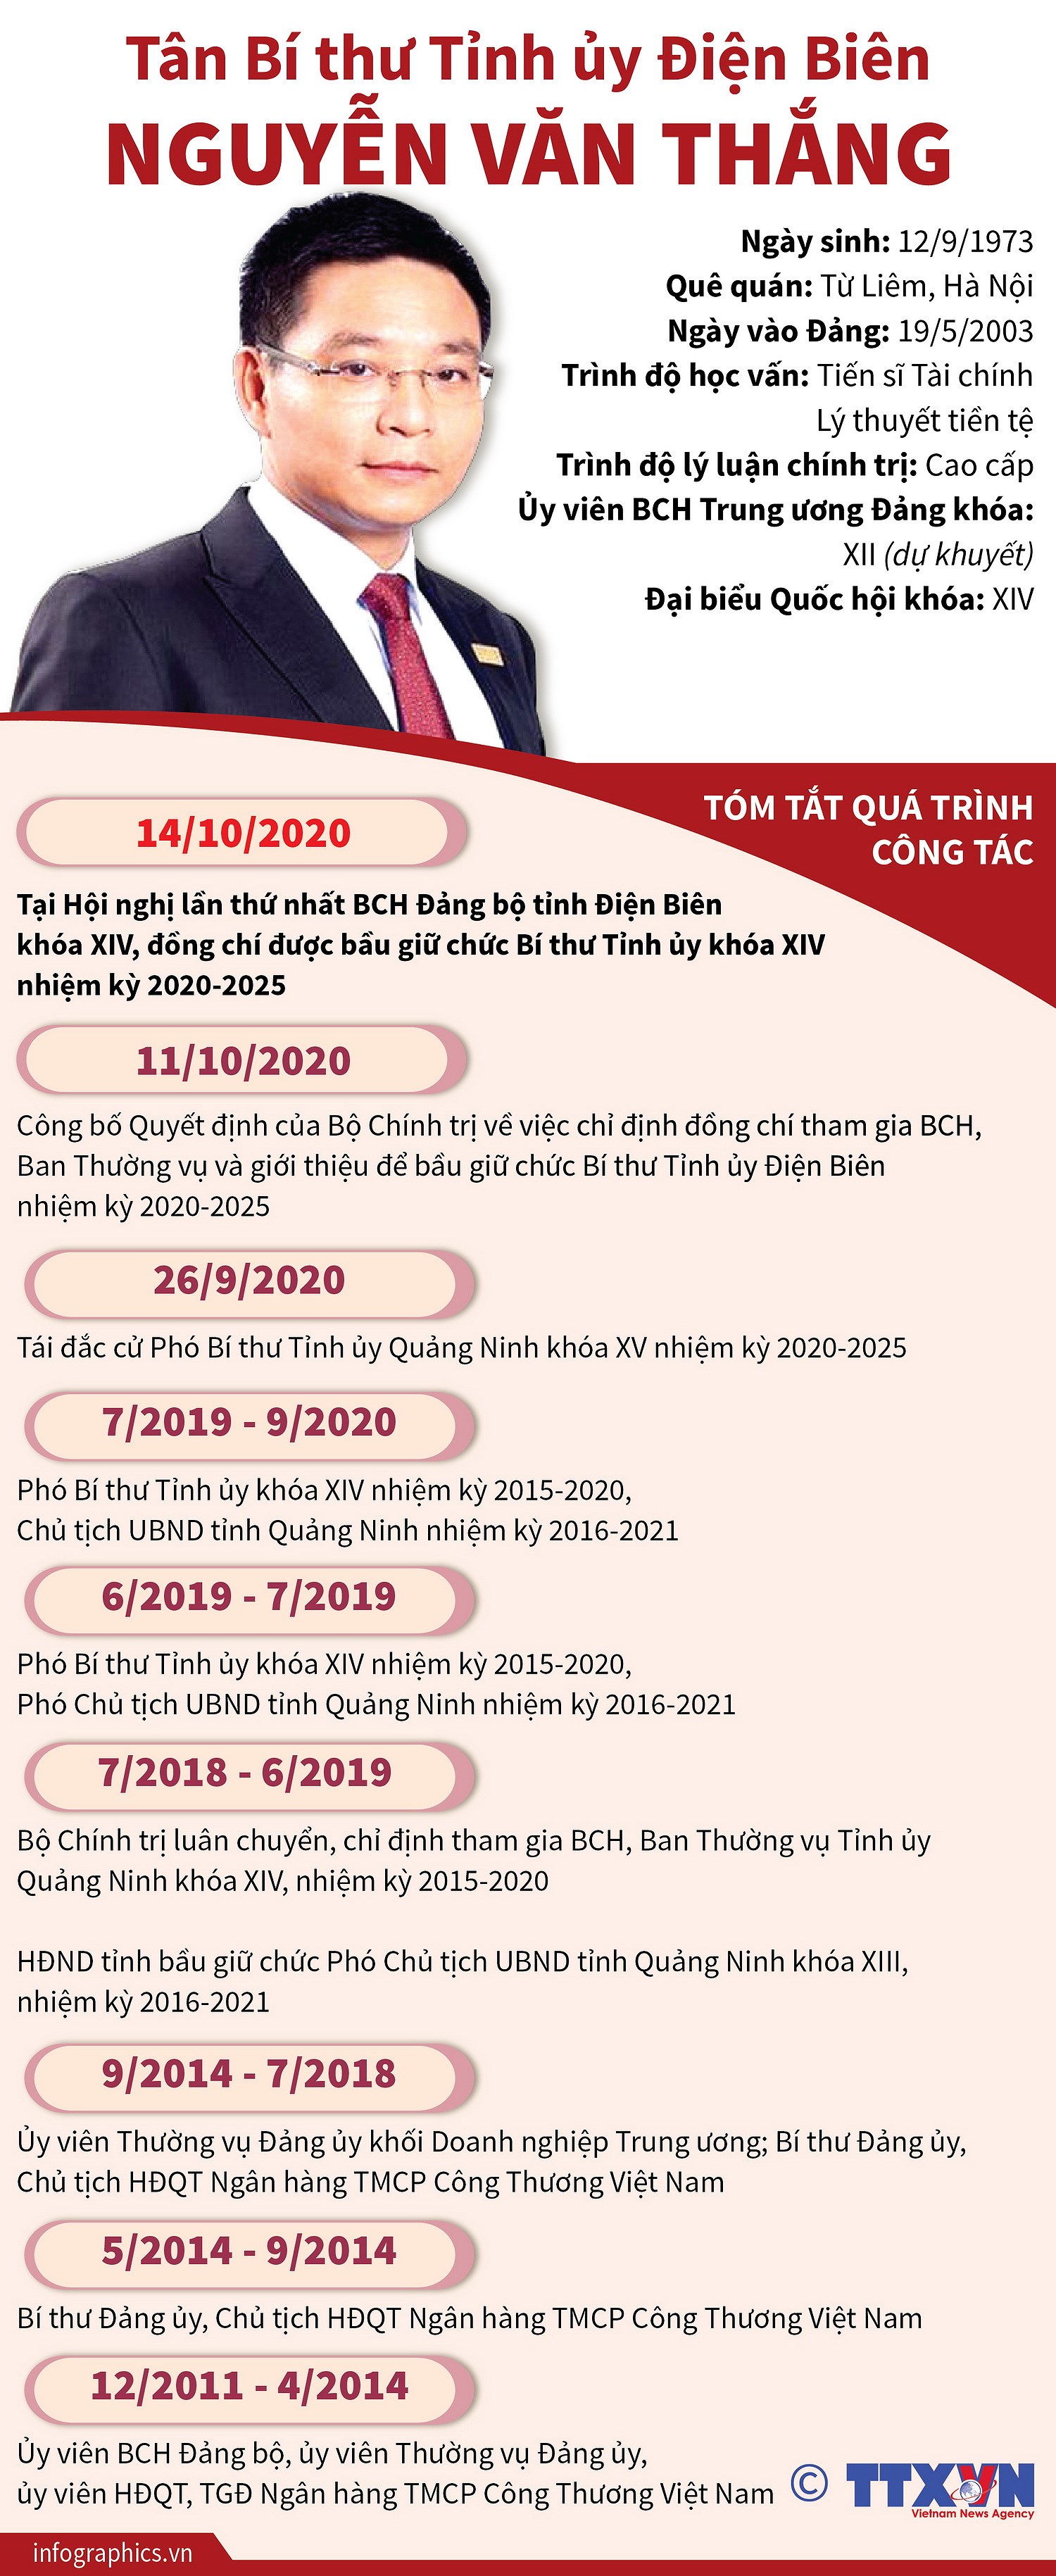 [Infographics] Tan Bi thu Tinh uy Dien Bien Nguyen Van Thang hinh anh 1